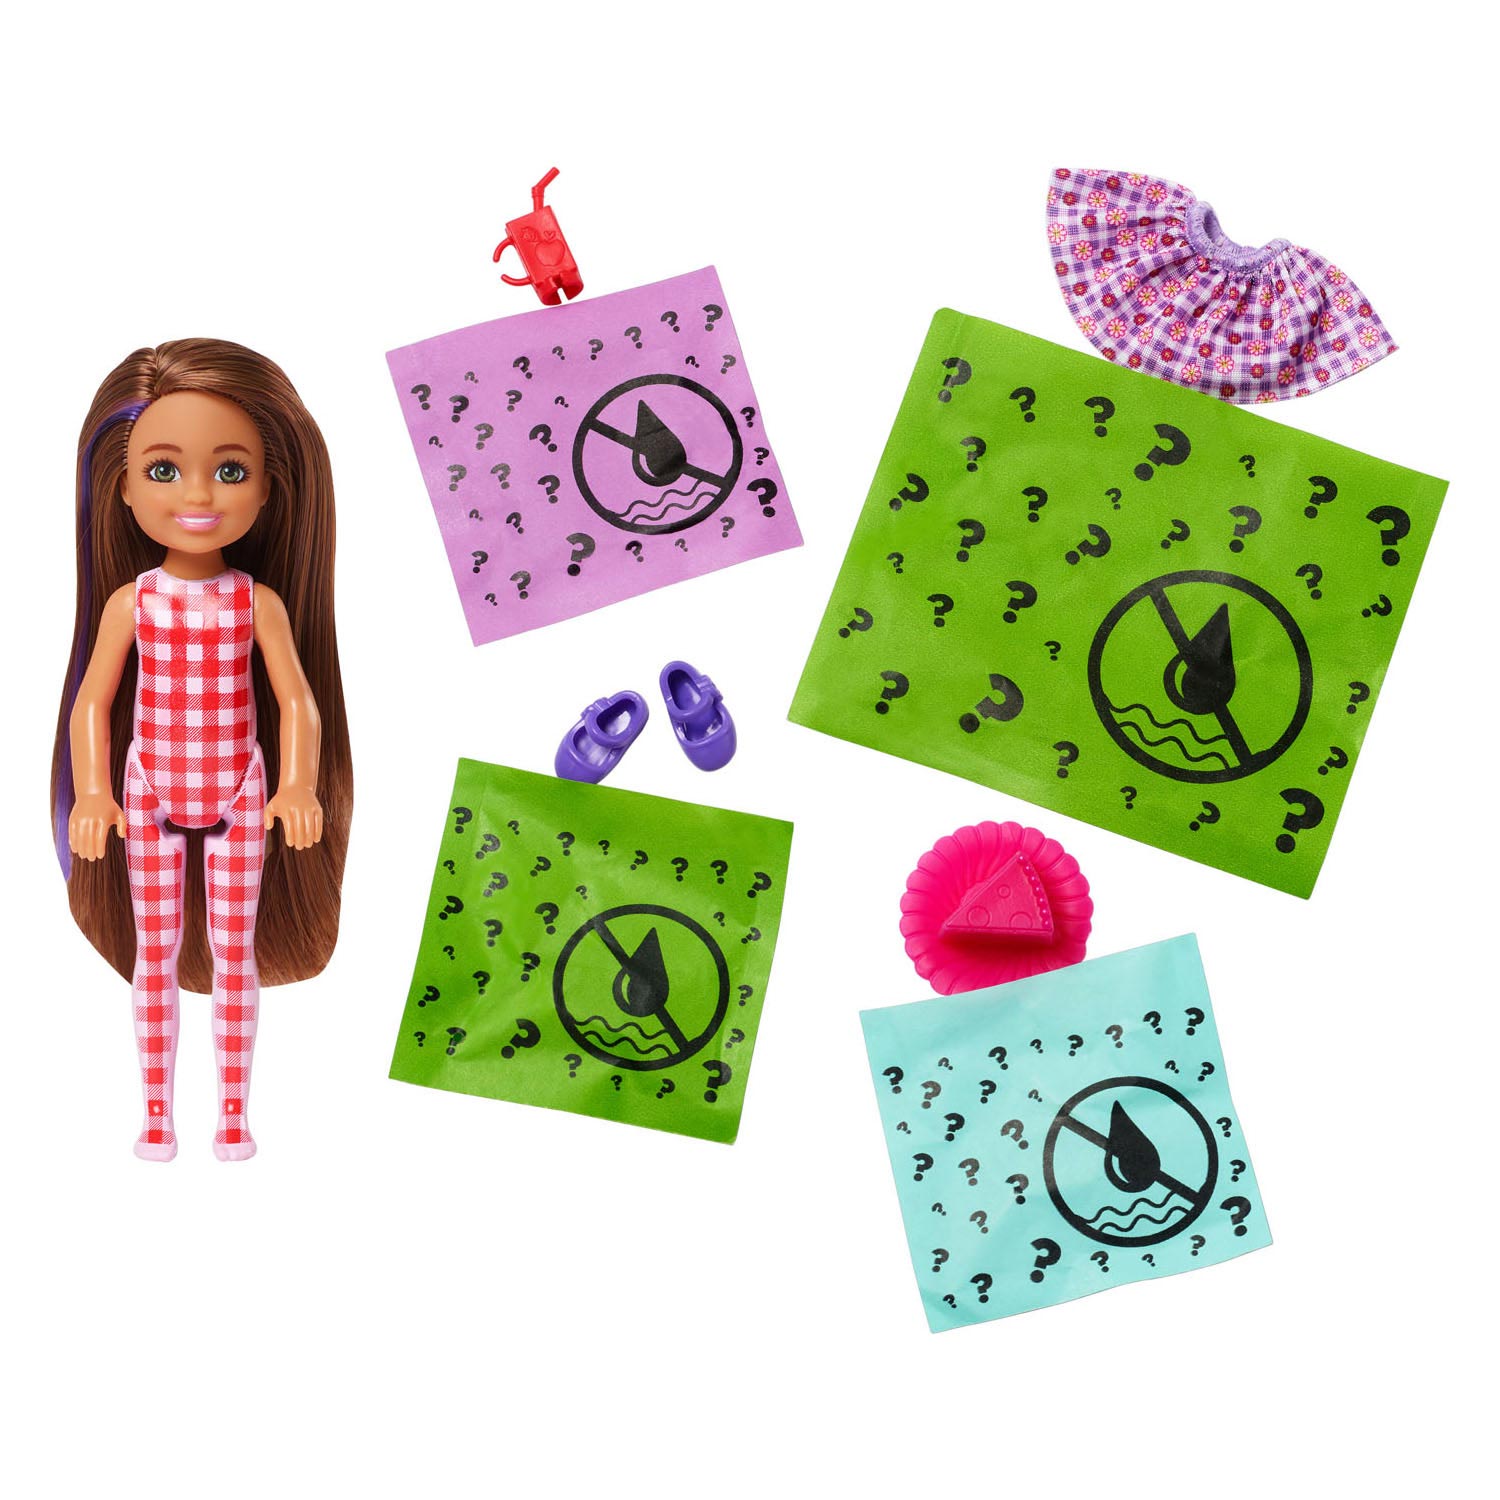 Barbie Color Reveal Chelsea Pop Picknick Serie